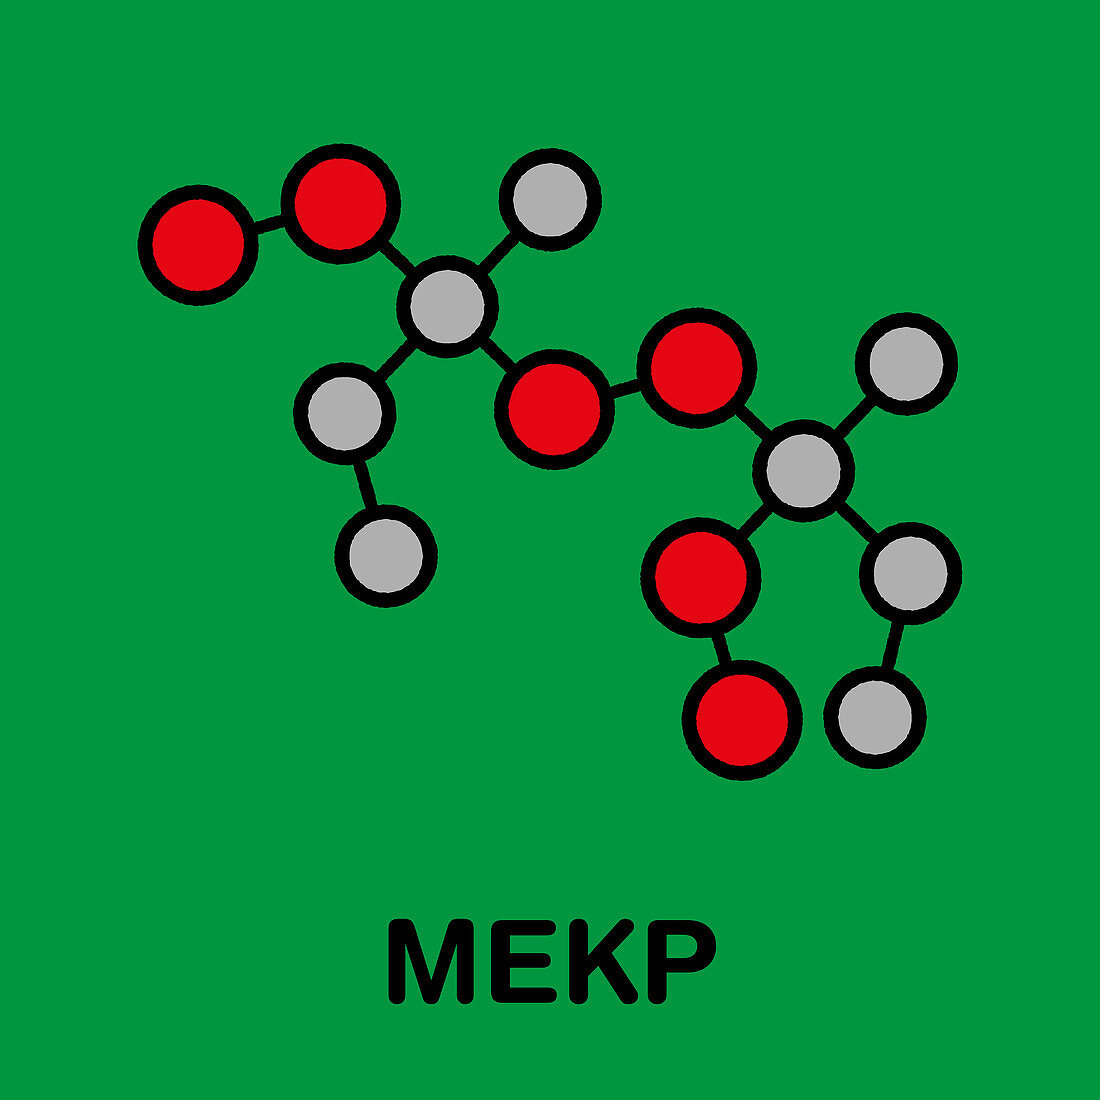 Methyl ethyl ketone peroxide explosive molecule